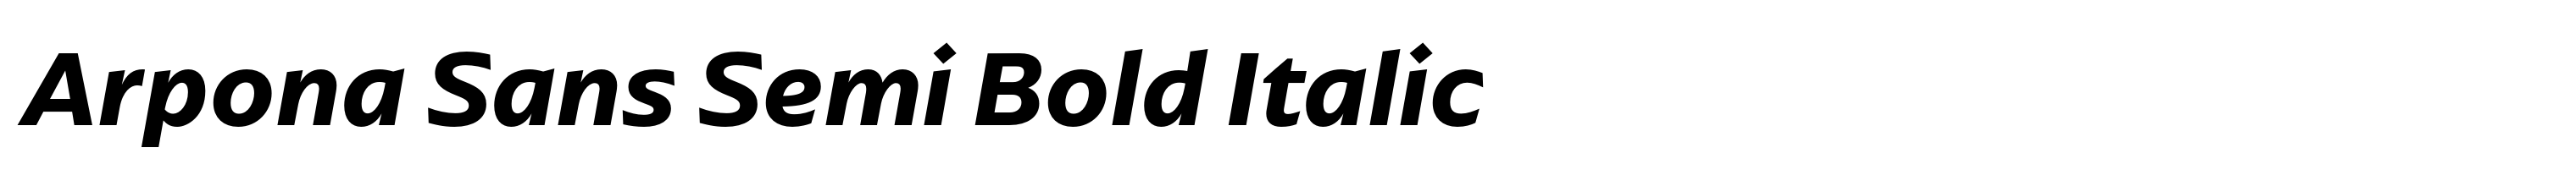 Arpona Sans Semi Bold Italic